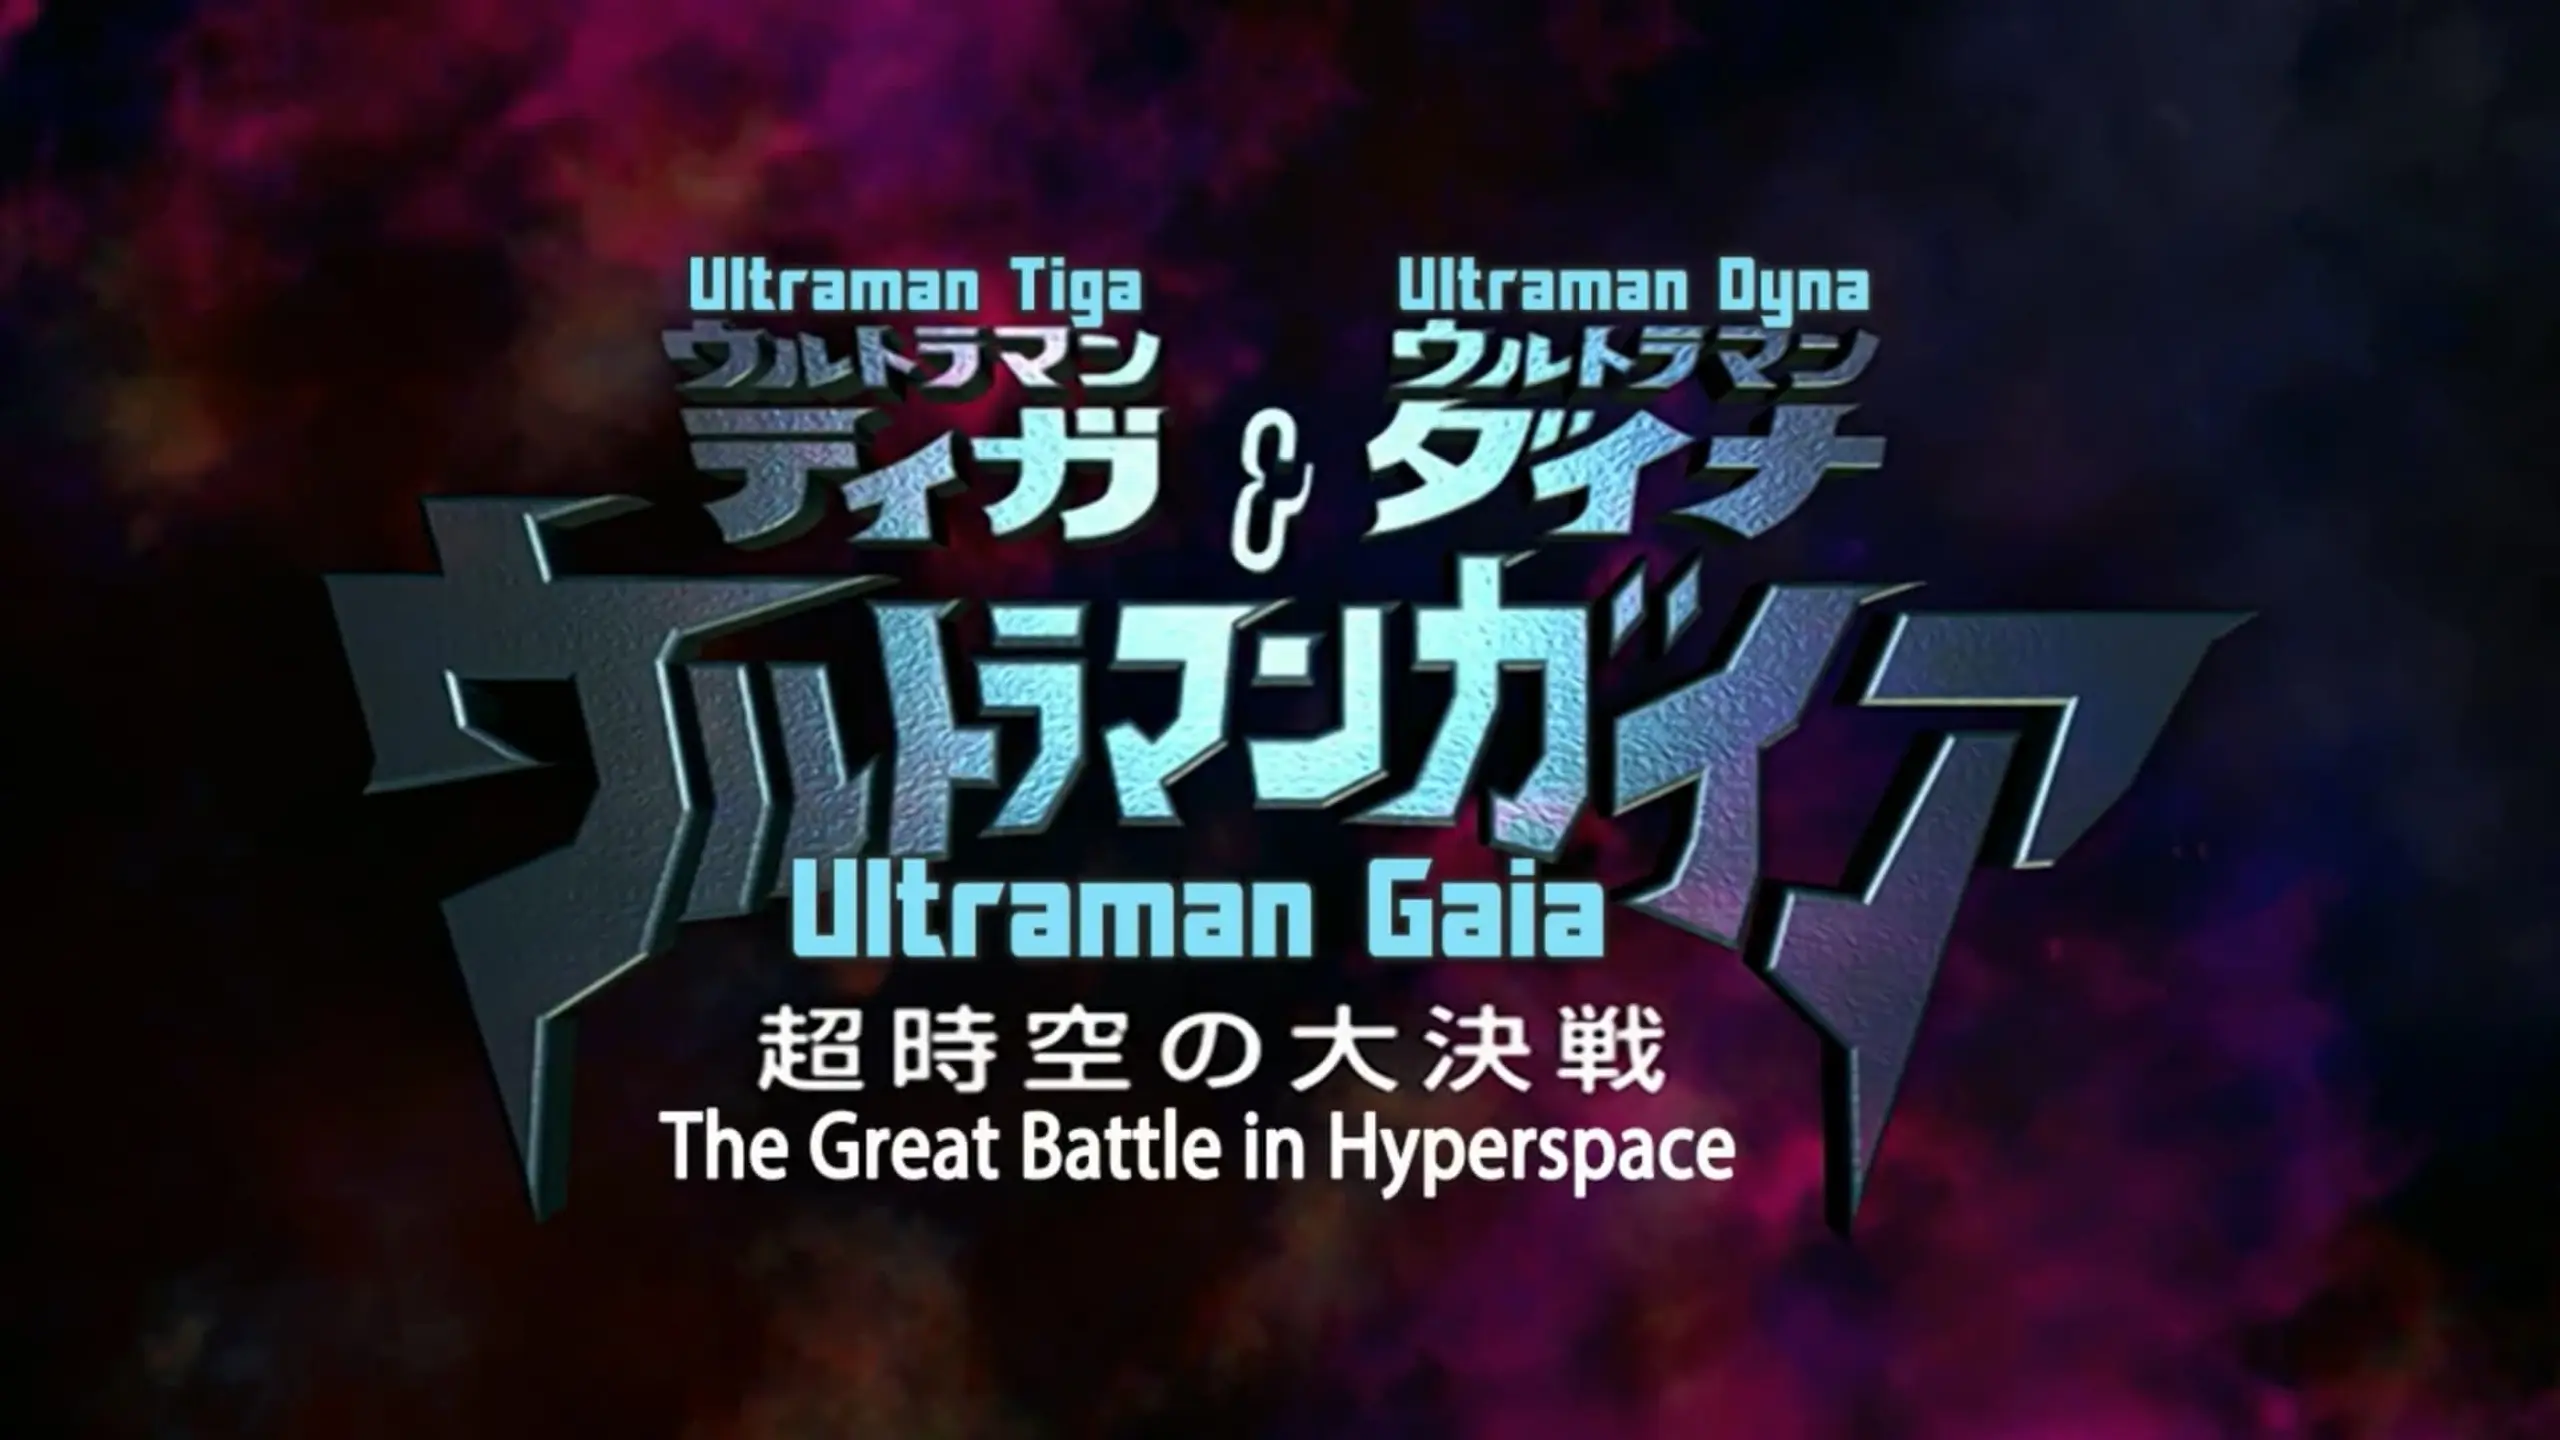 Ultraman Tiga & Ultraman Dyna & Ultraman Gaia: The Battle in Hyperspace